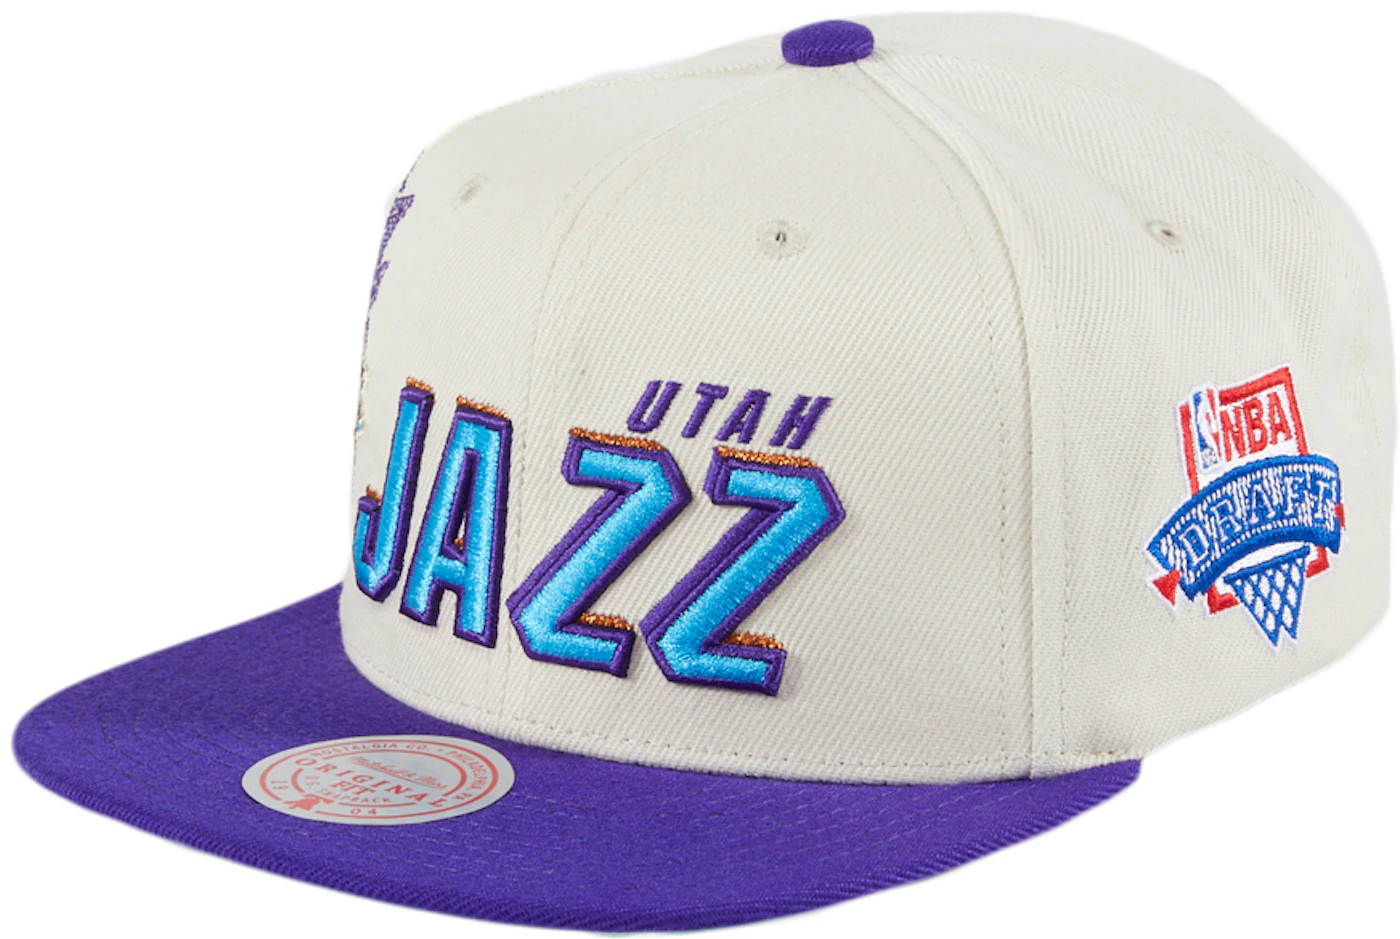 Mitchell & Ness Utah Jazz Rear Script Snapback Hat - Light Blue, Purple